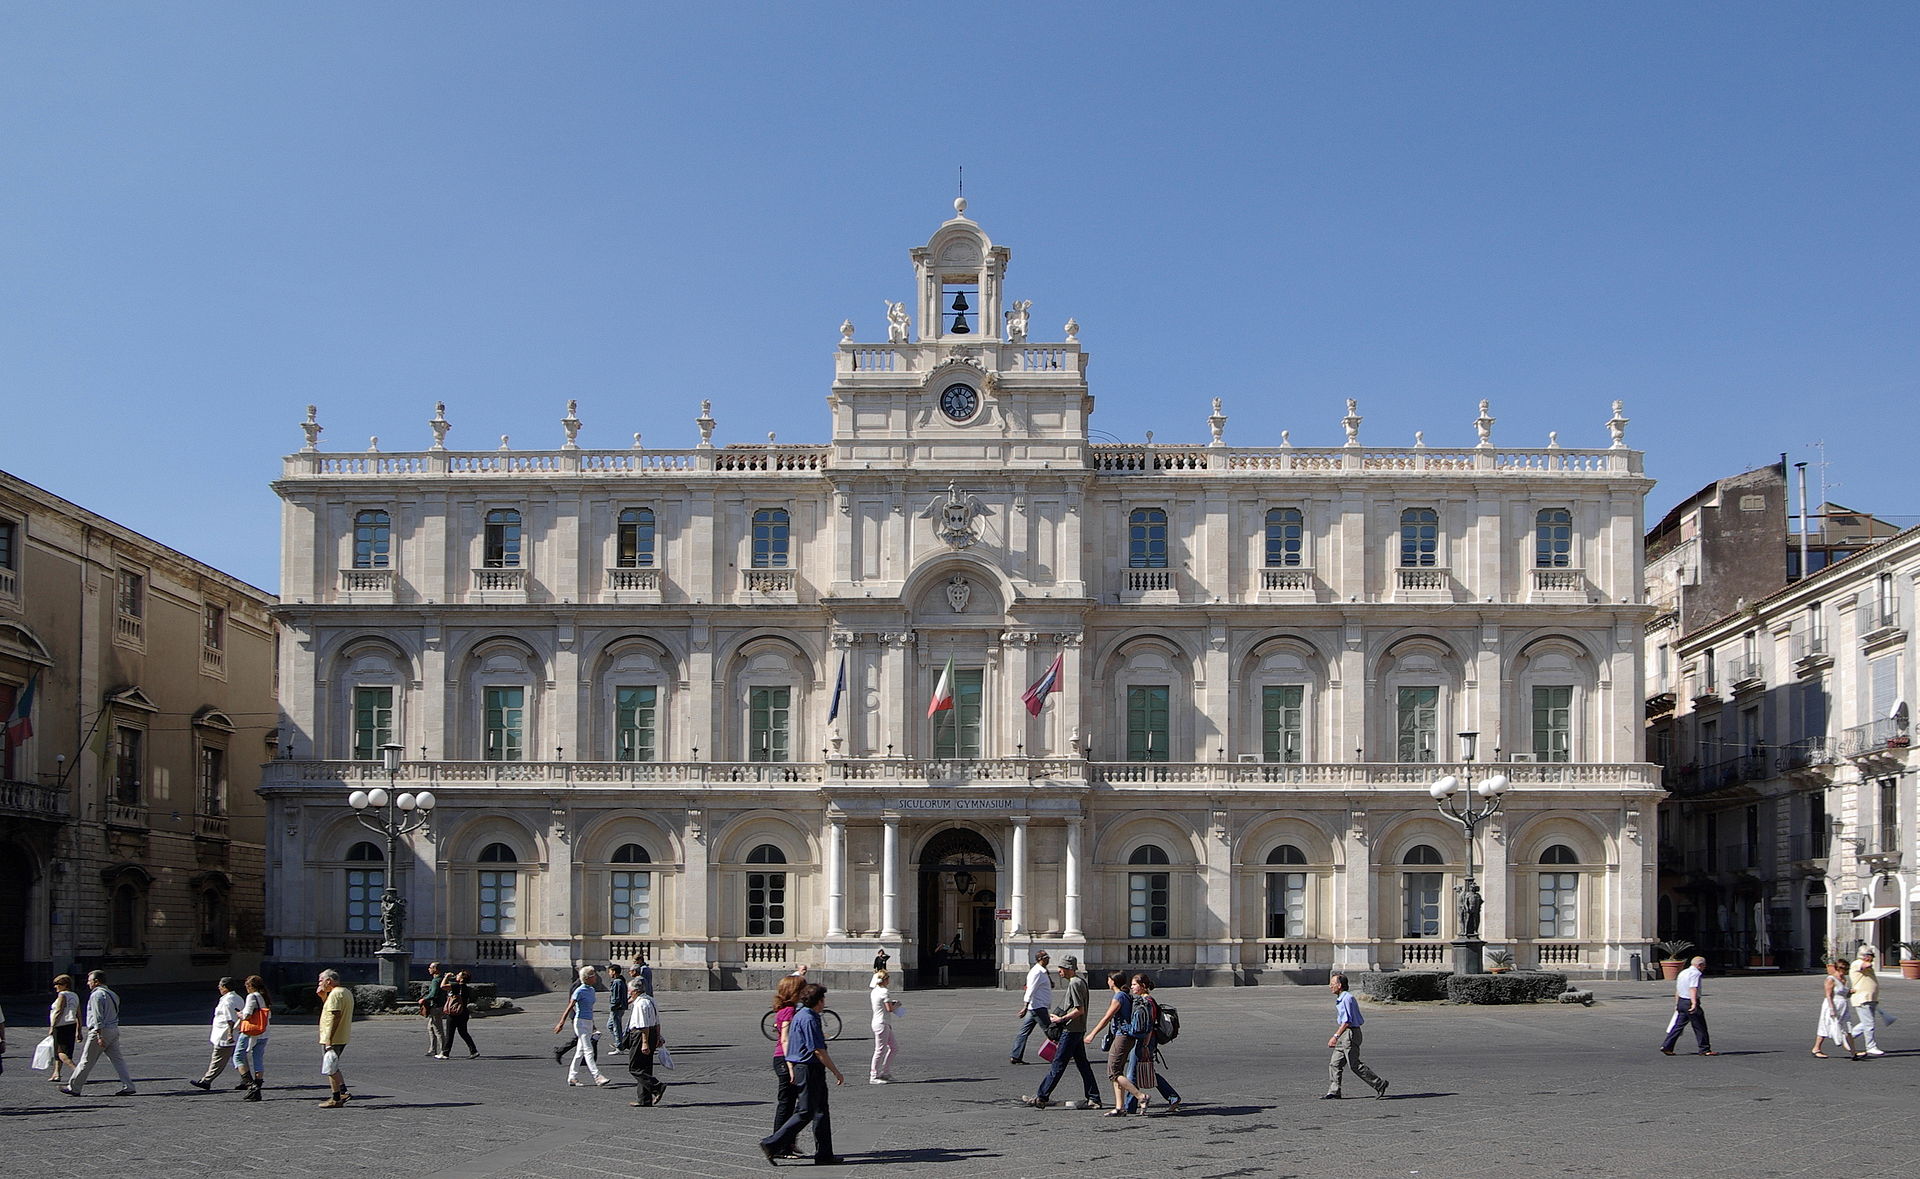 https://it.wikipedia.org/wiki/Palazzo_dell%27Universit%C3%A0_(Catania)#/media/File:Catania_BW_2012-10-06_11-26-20.JPG